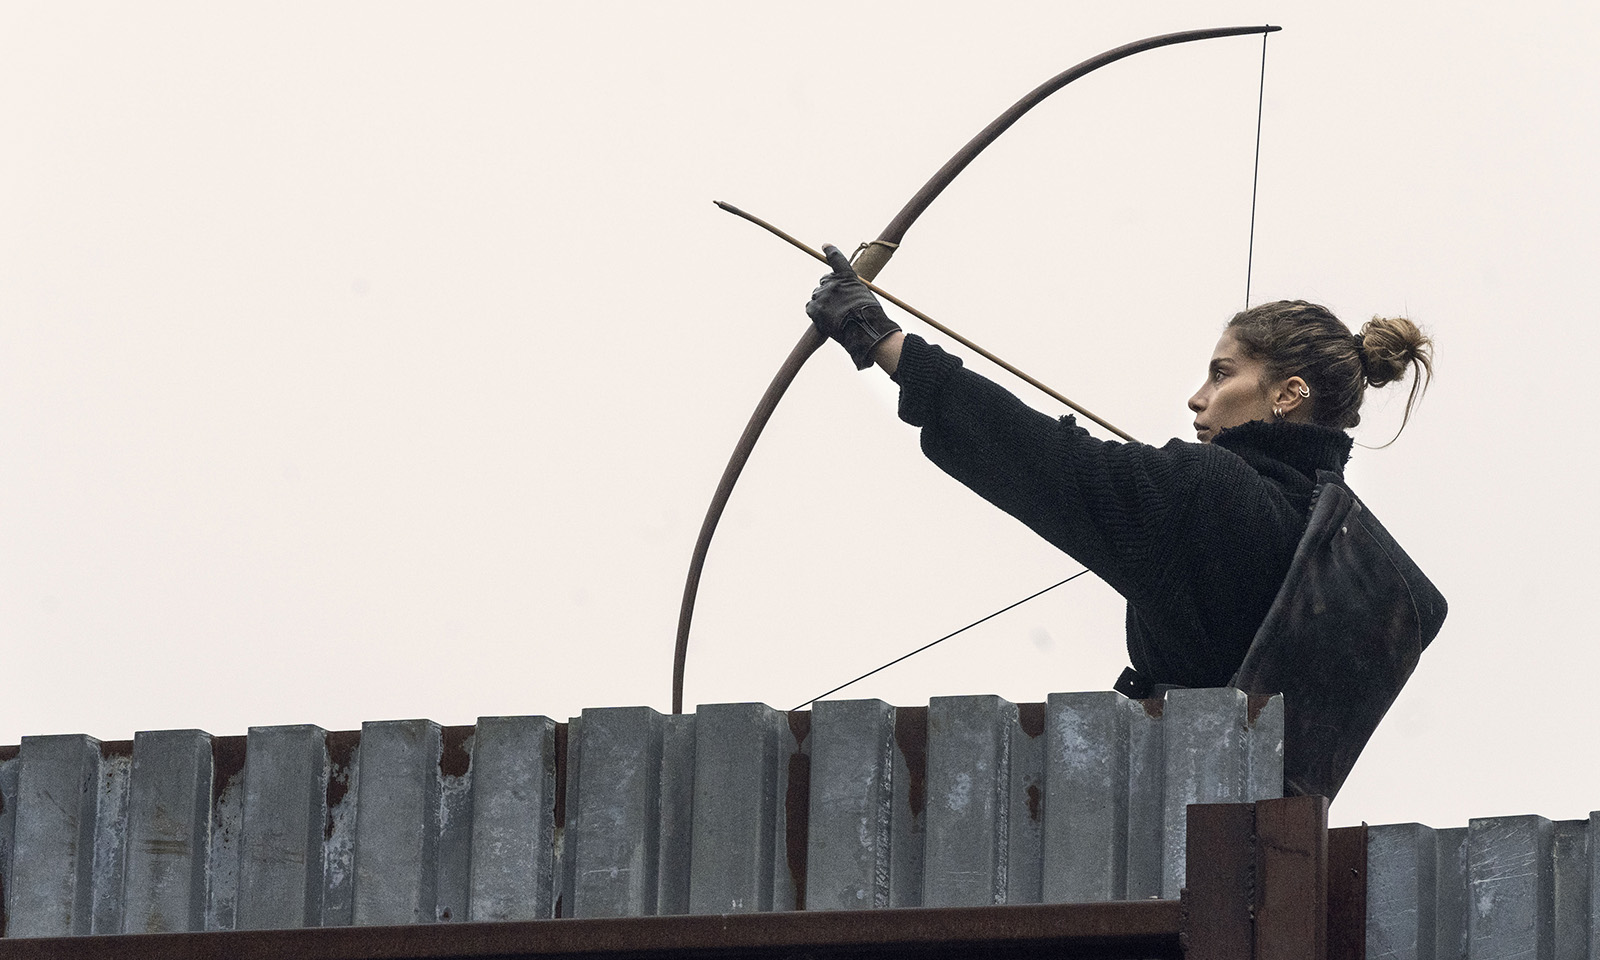 Magna apontando seu arco e flecha no episódio Hunted da 11ª temporada de The Walking Dead.